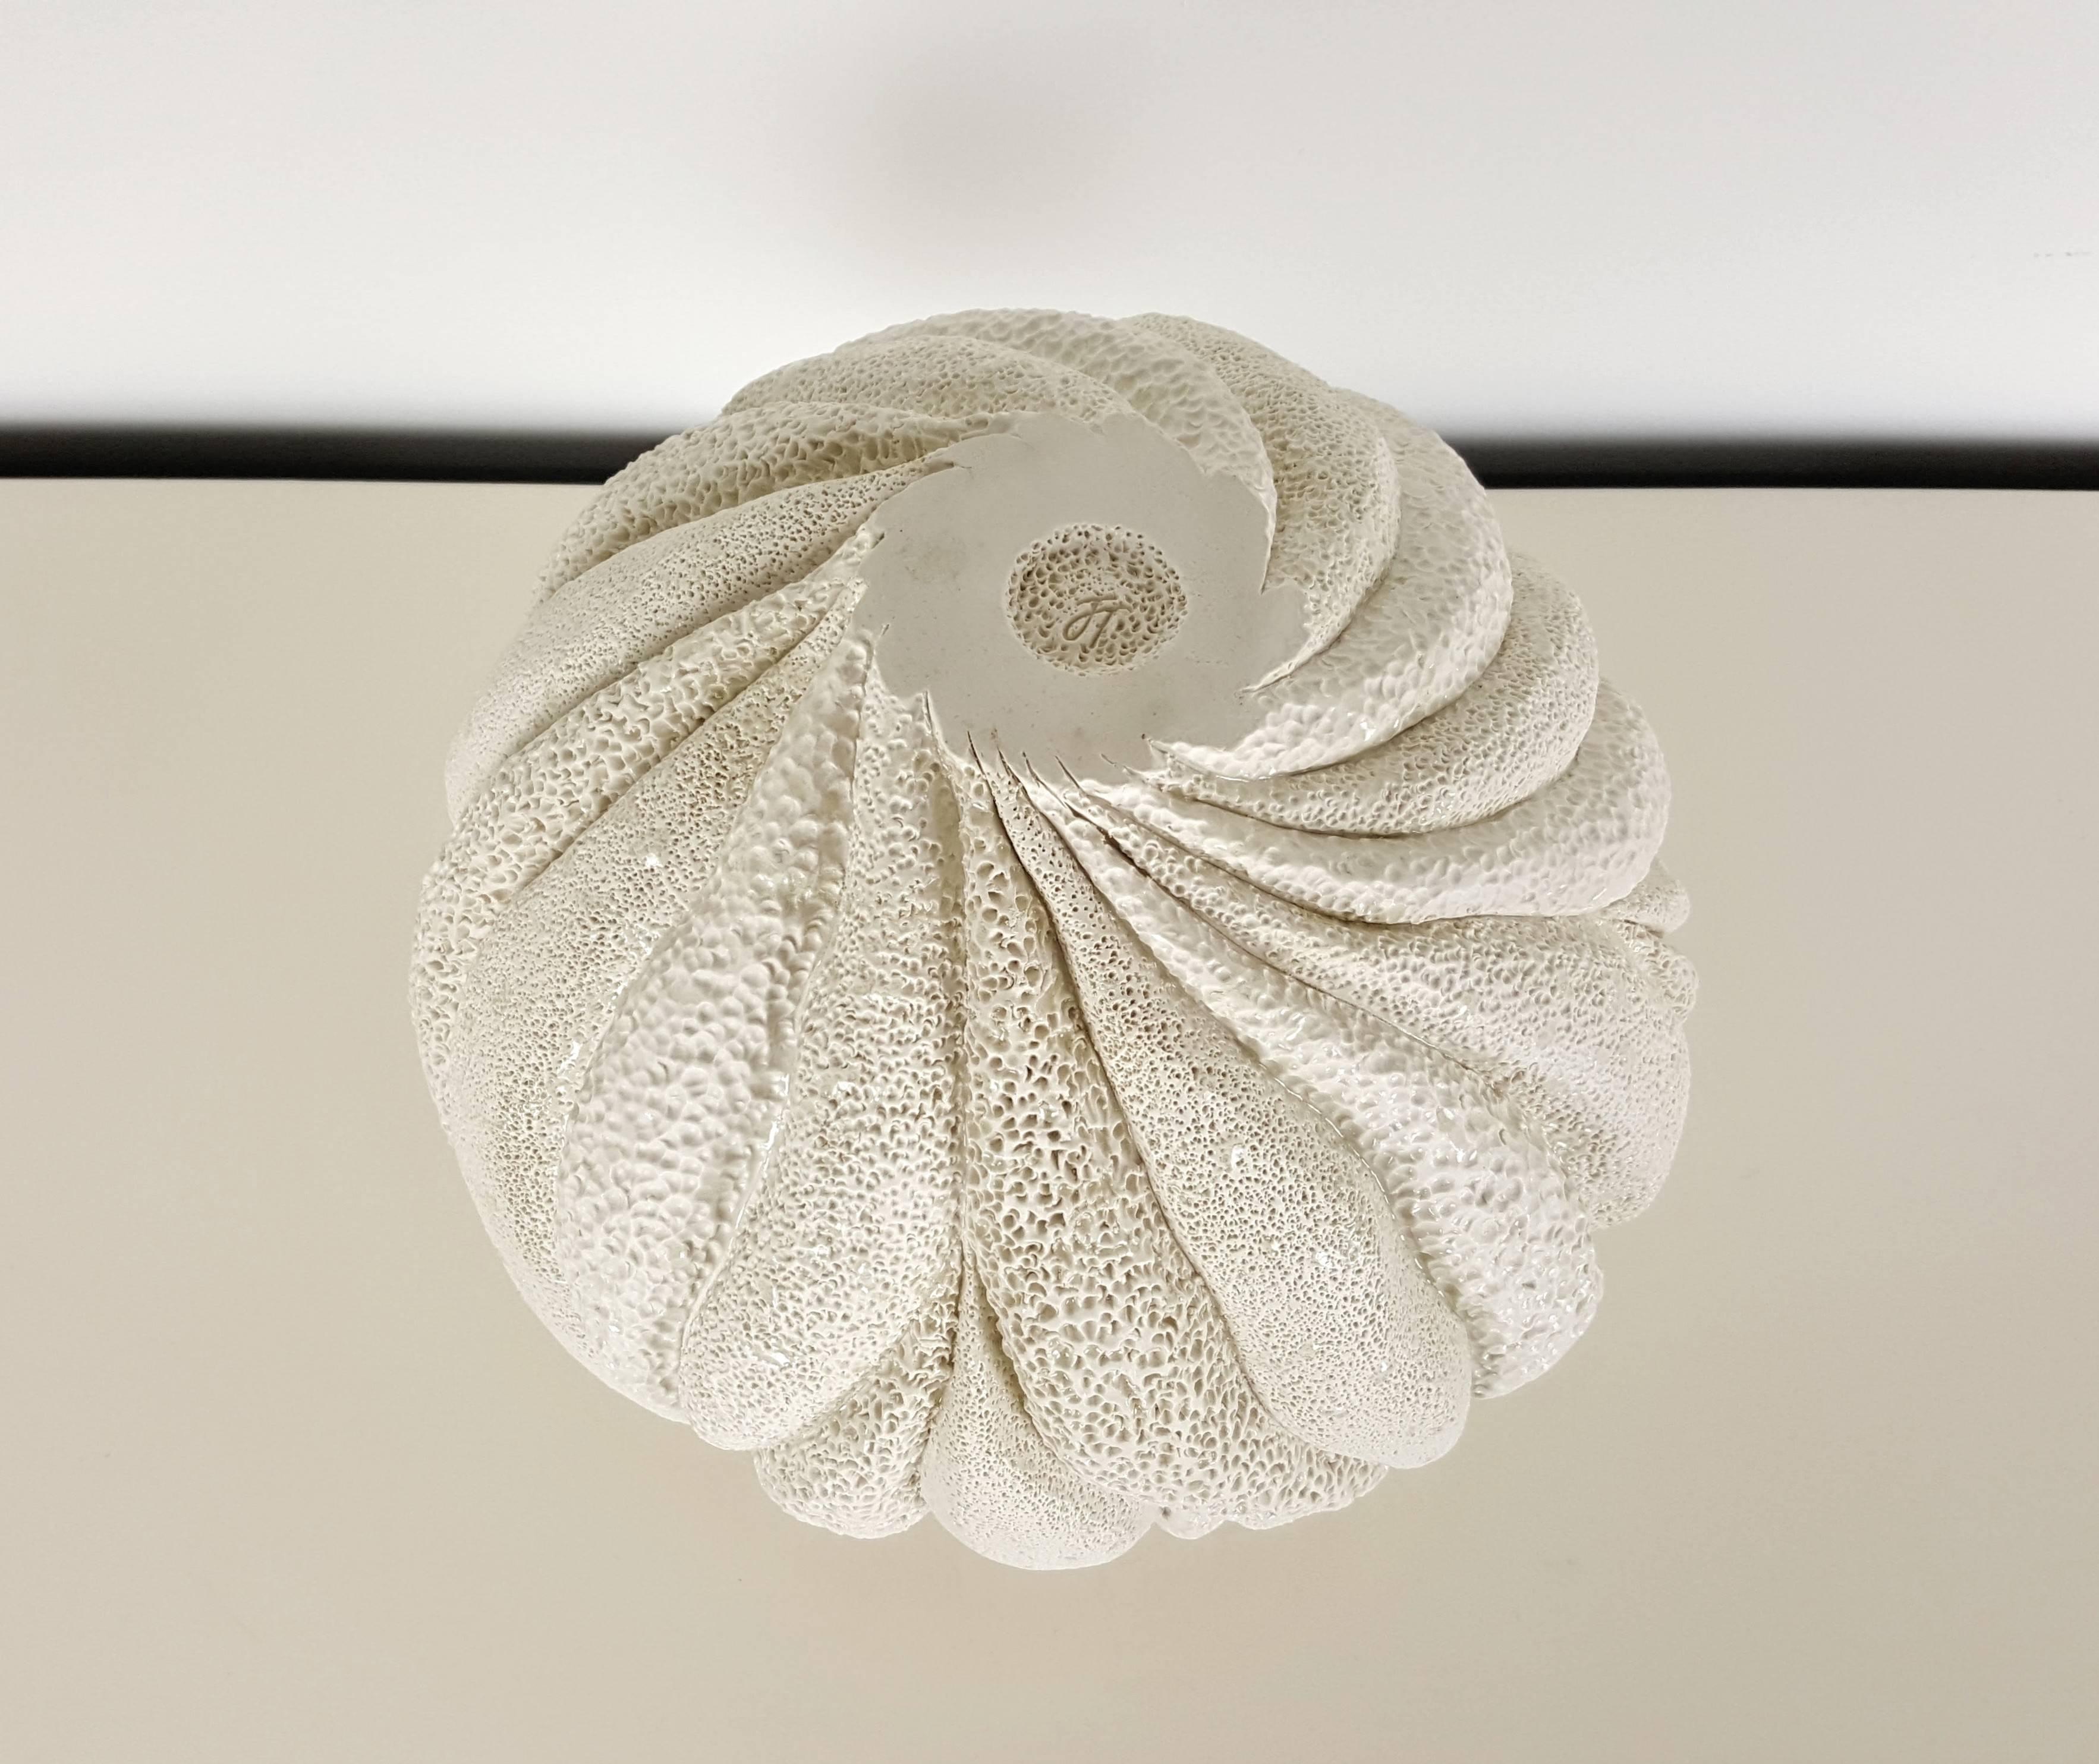 Ceramic Creamy White Large Round Coastal Collage Vessel by Judi Tavill, 2016